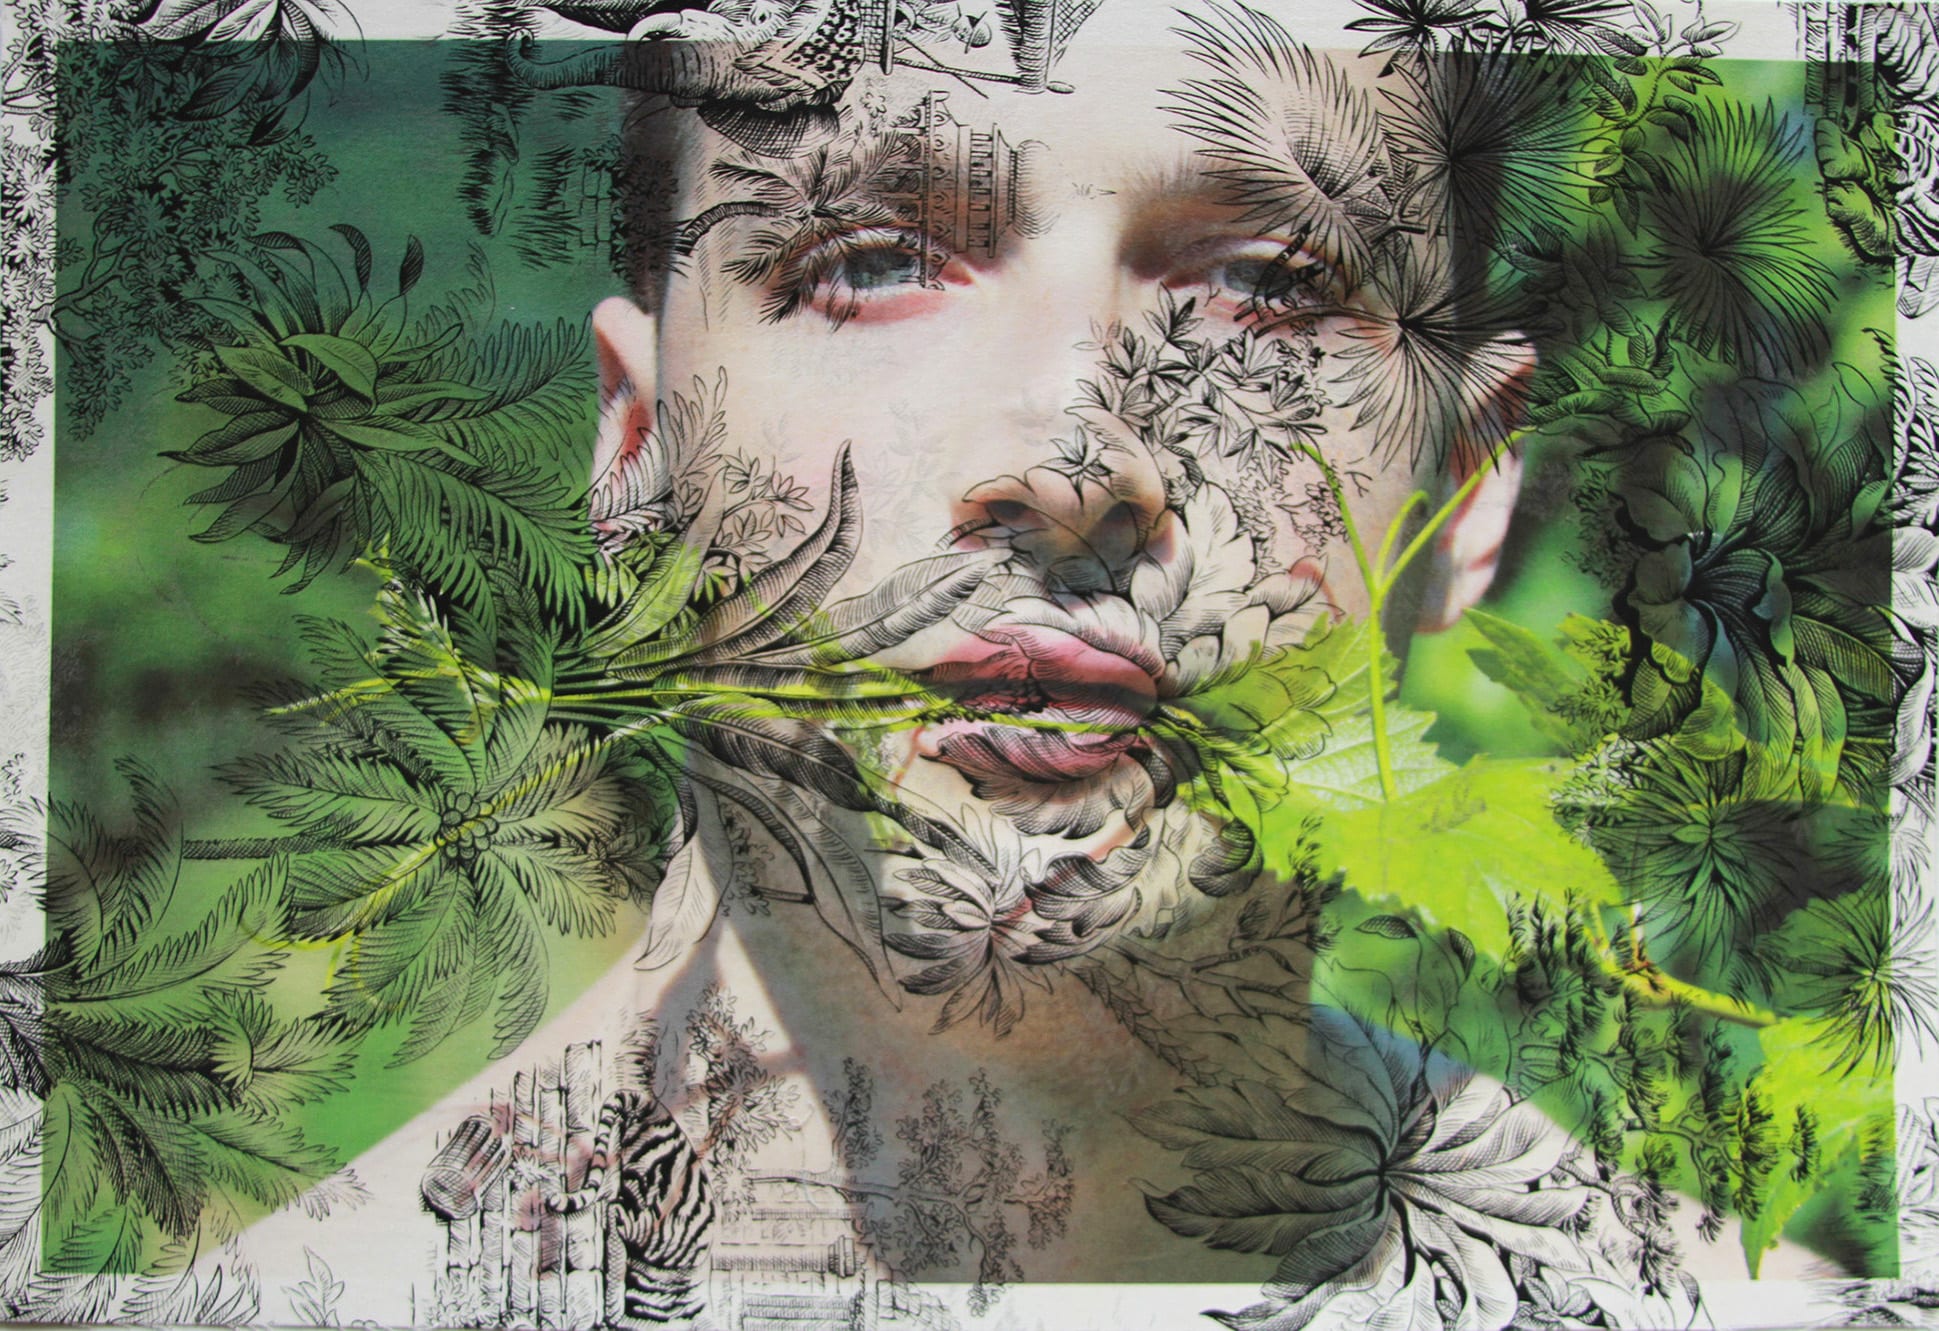 Tim Hailand, Dan Vine face Vienna (on black tiger toile), digital pigment print on patterned toile de Jouy fabric, 13" x 19", unique print, 2012